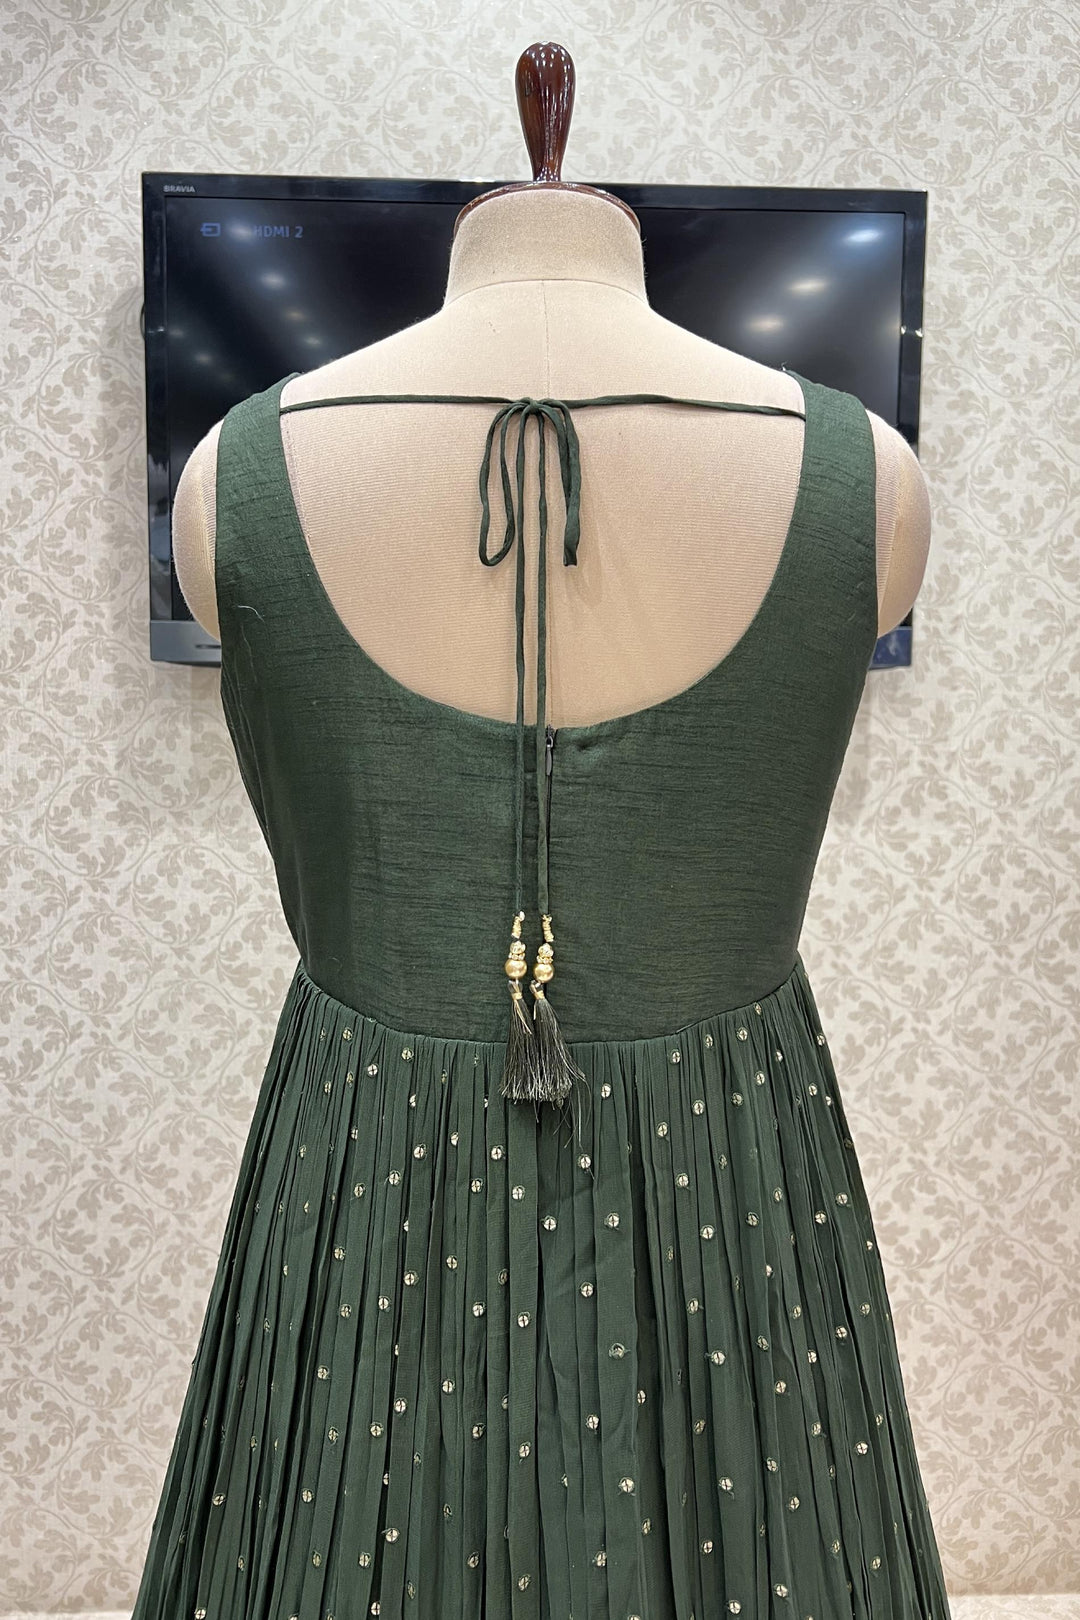 Dark Green Mirror, Zari and Beads work with Digital Print Floor Length Anarkali Suit - Seasons Chennai